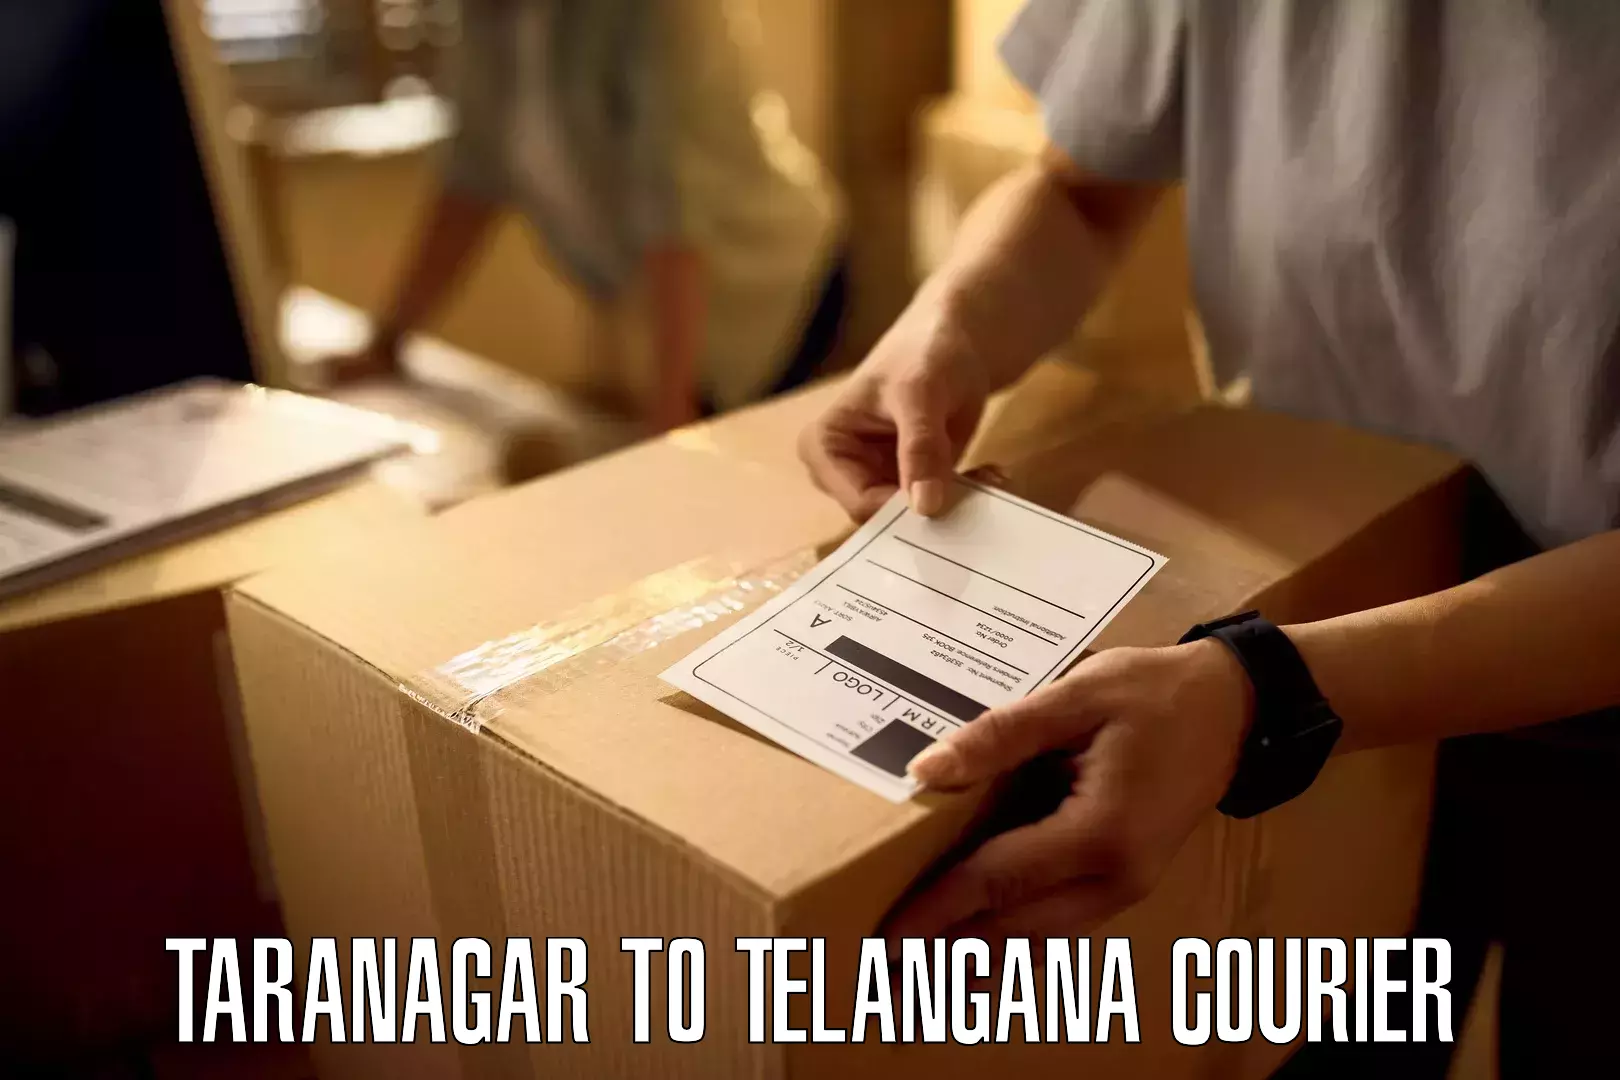 Courier service partnerships Taranagar to Alair